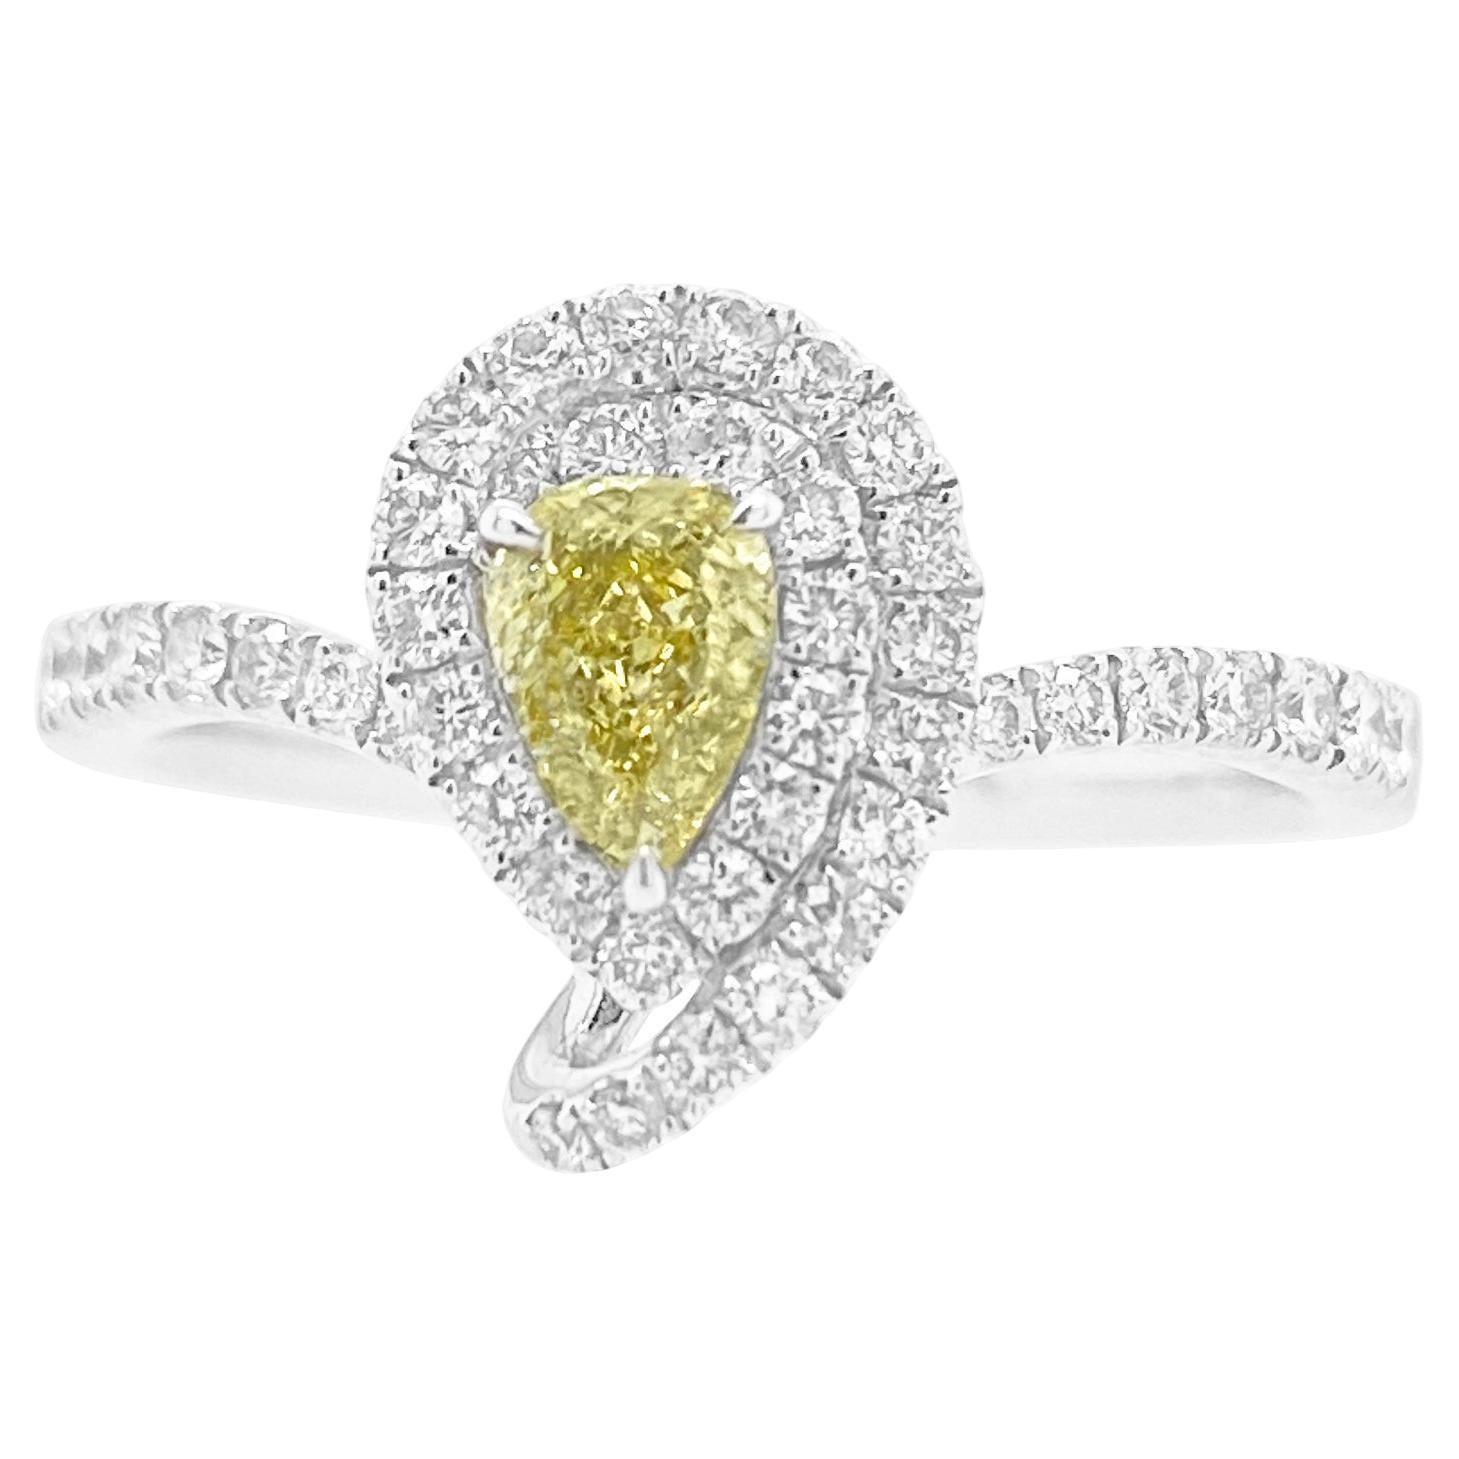 Rare Fancy Intense Yellow and White diamond ring